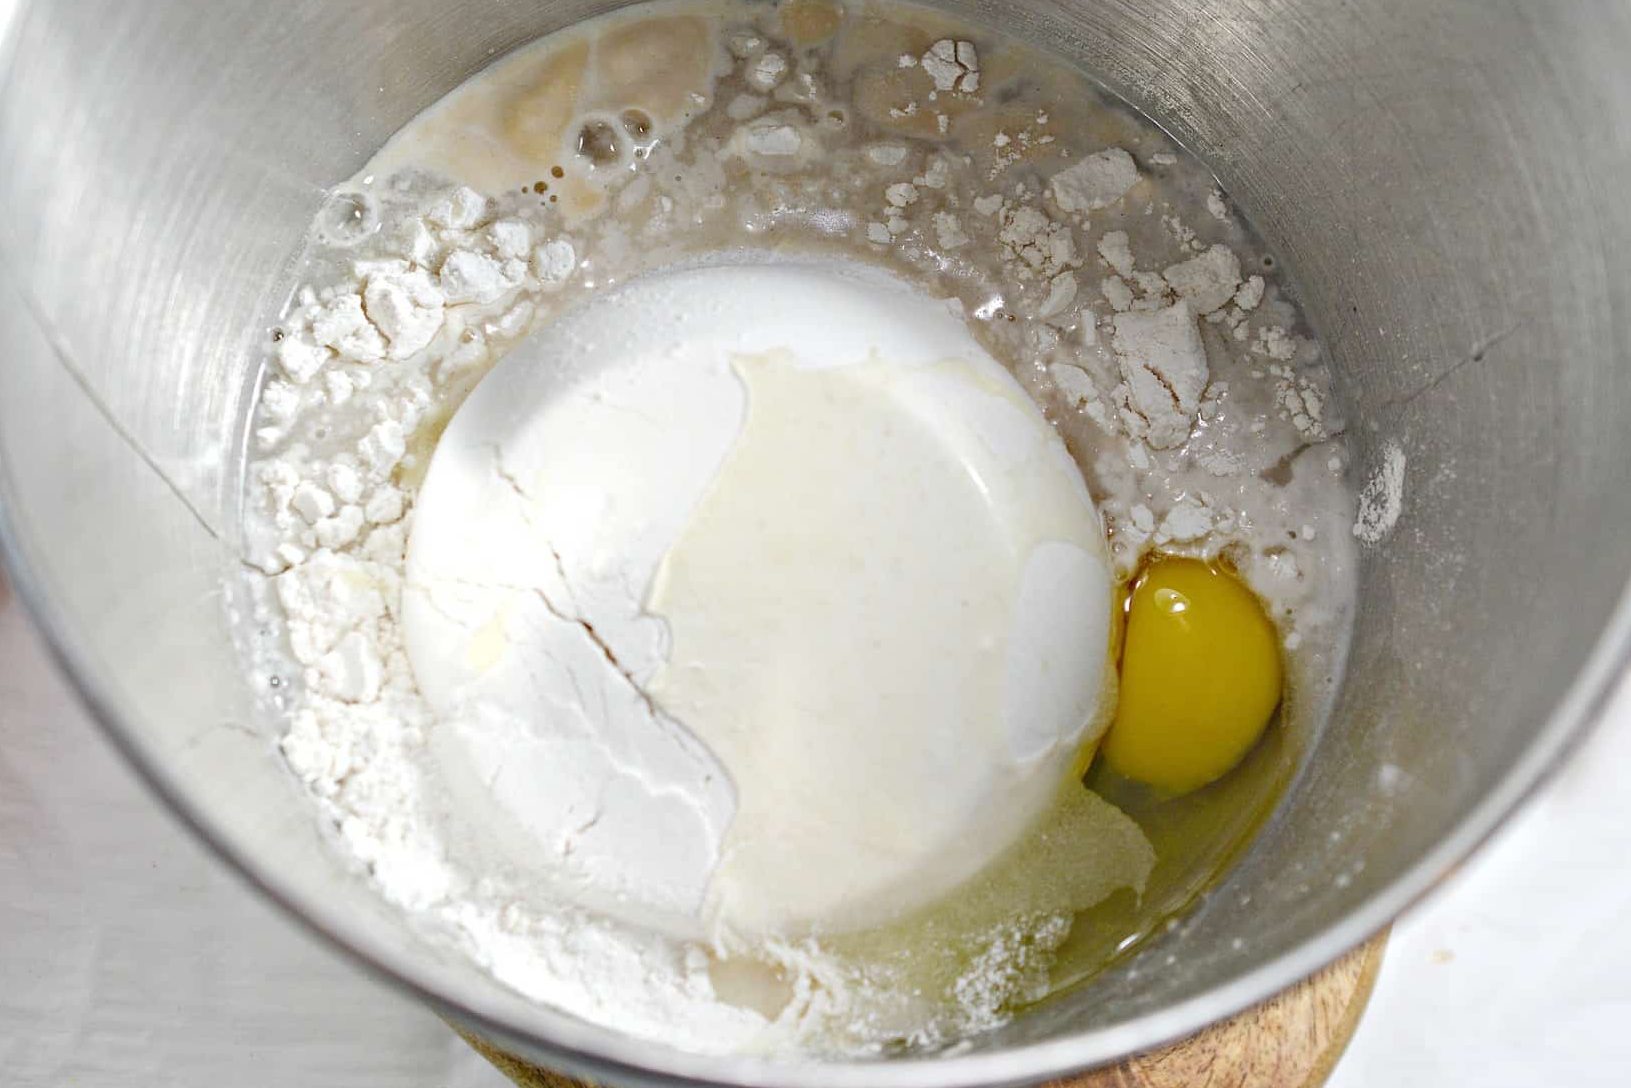 add 1 large egg and 1 tsp of salt.